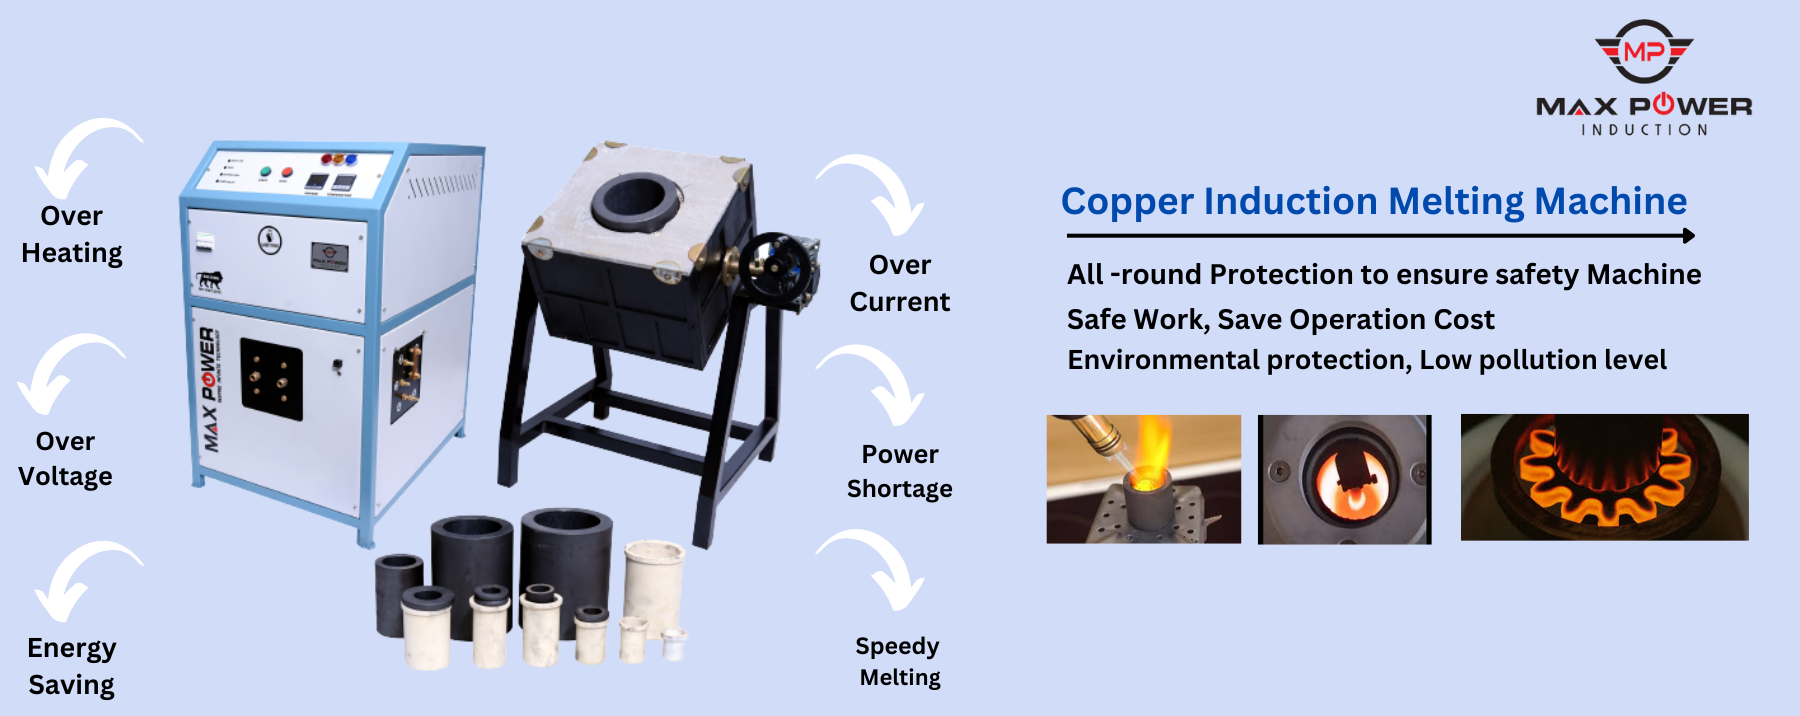 Copper Induction Melting Machine